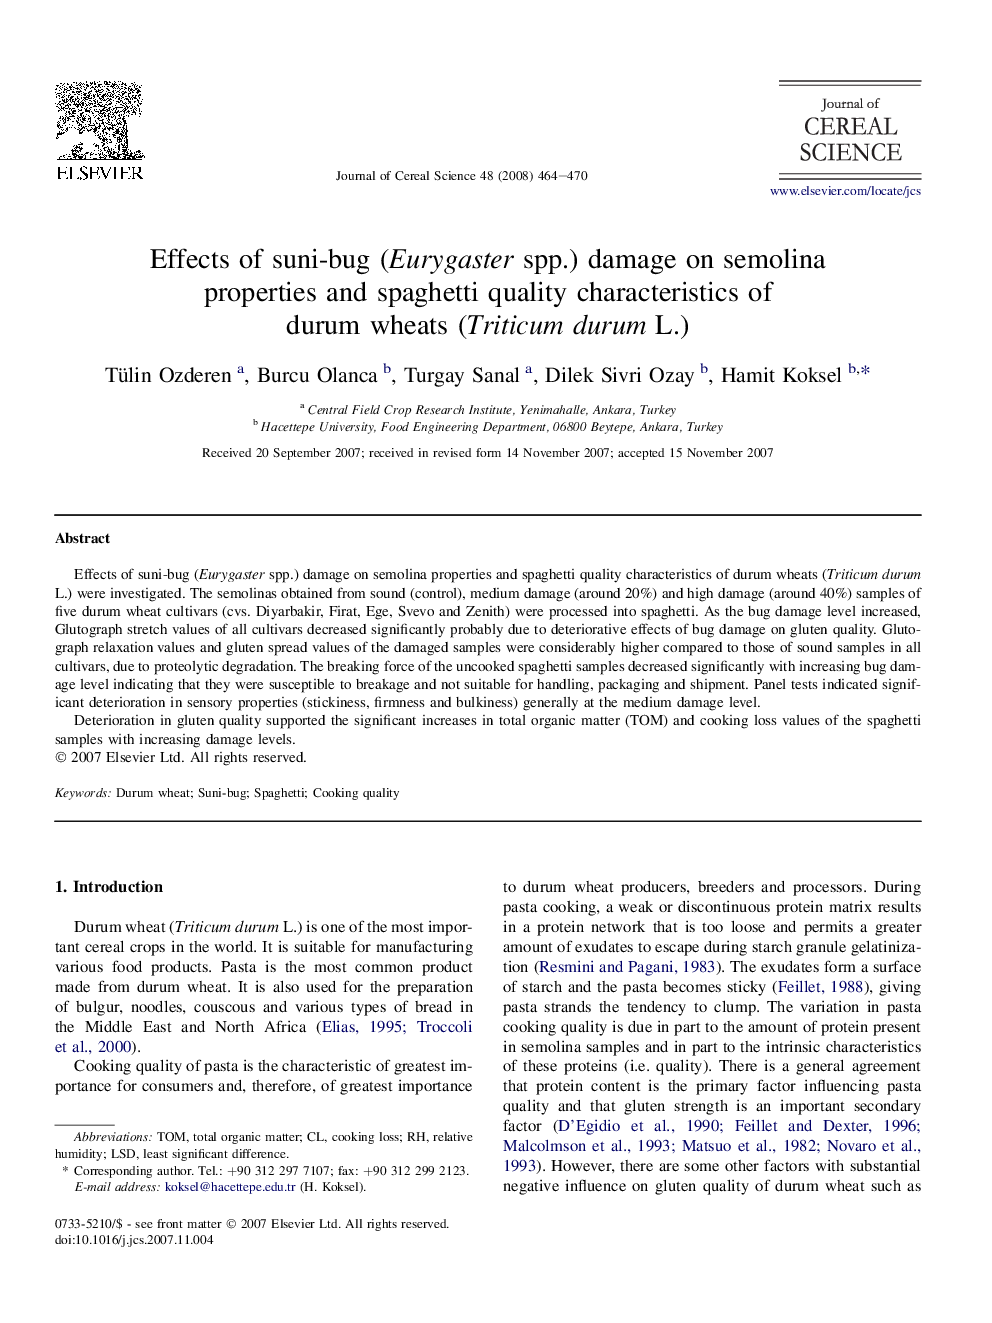 Effects of suni-bug (Eurygaster spp.) damage on semolina properties and spaghetti quality characteristics of durum wheats (Triticum durum L.)